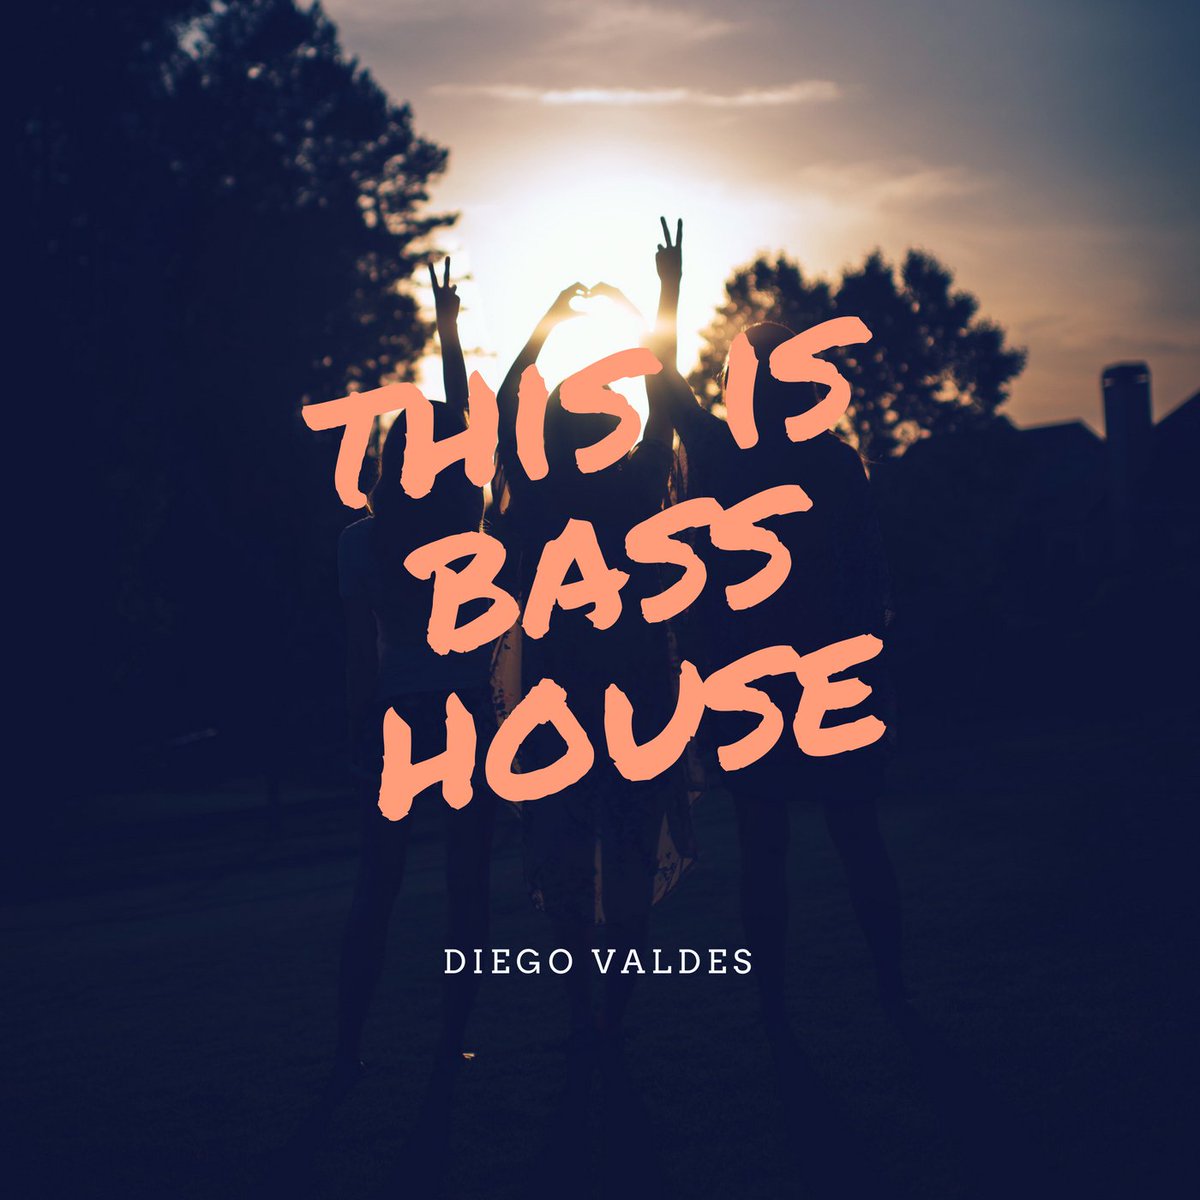 Fuck yeah!
#basshouse 
#Soundcloudmusic 
@spinnintalentpool